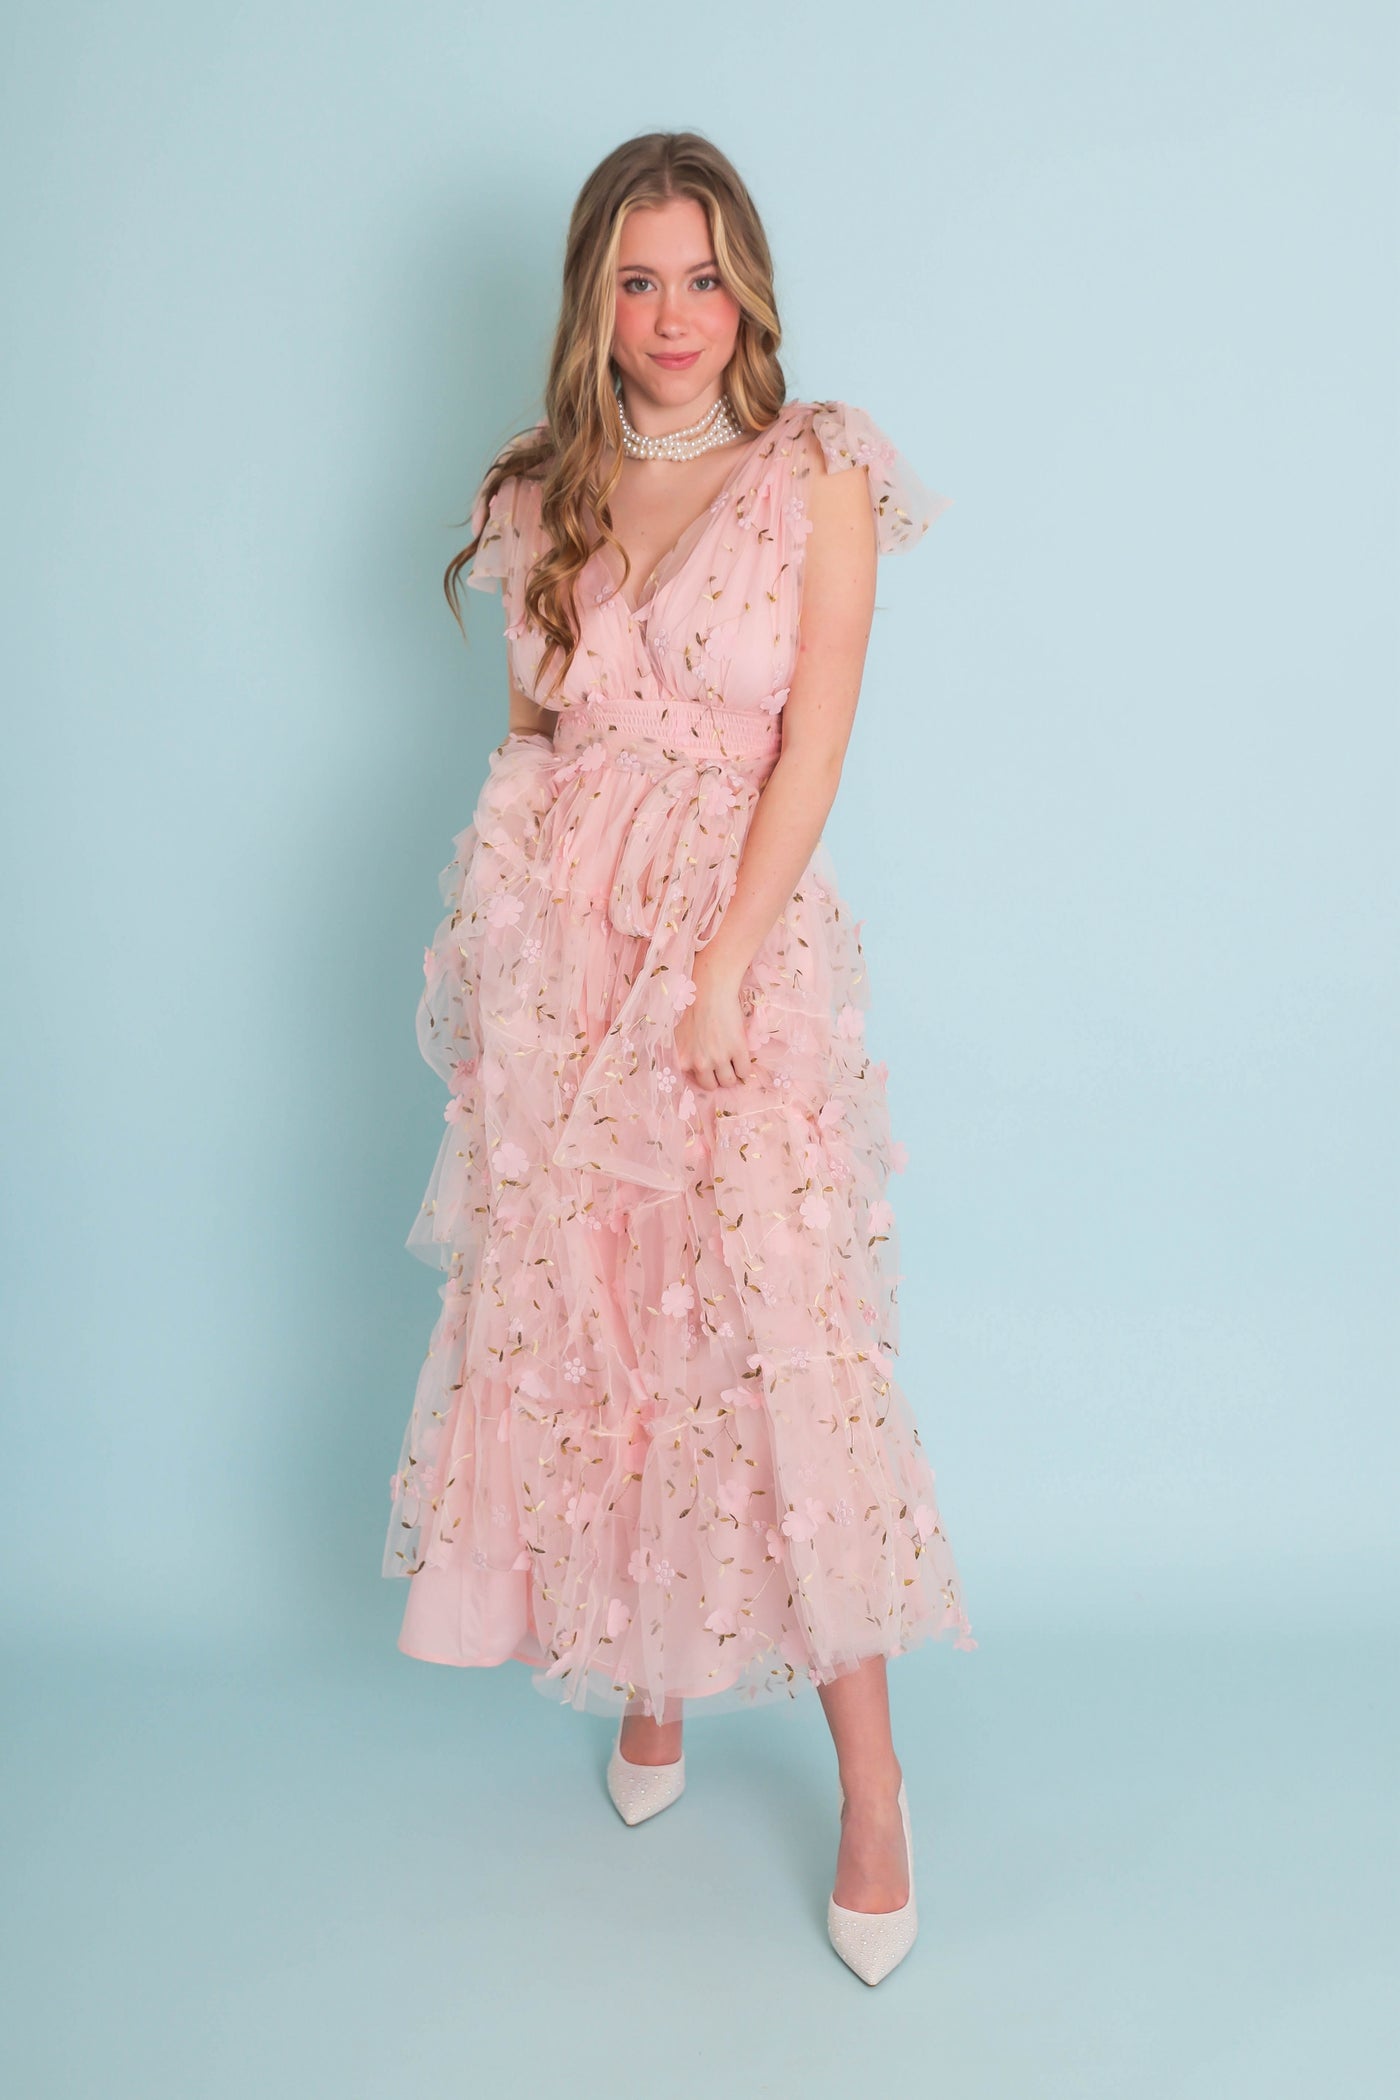 Blush Pink Tulle Maxi Dress- 3D Flower Maxi Dress- Elegant Tulle Flower Maxi Dress